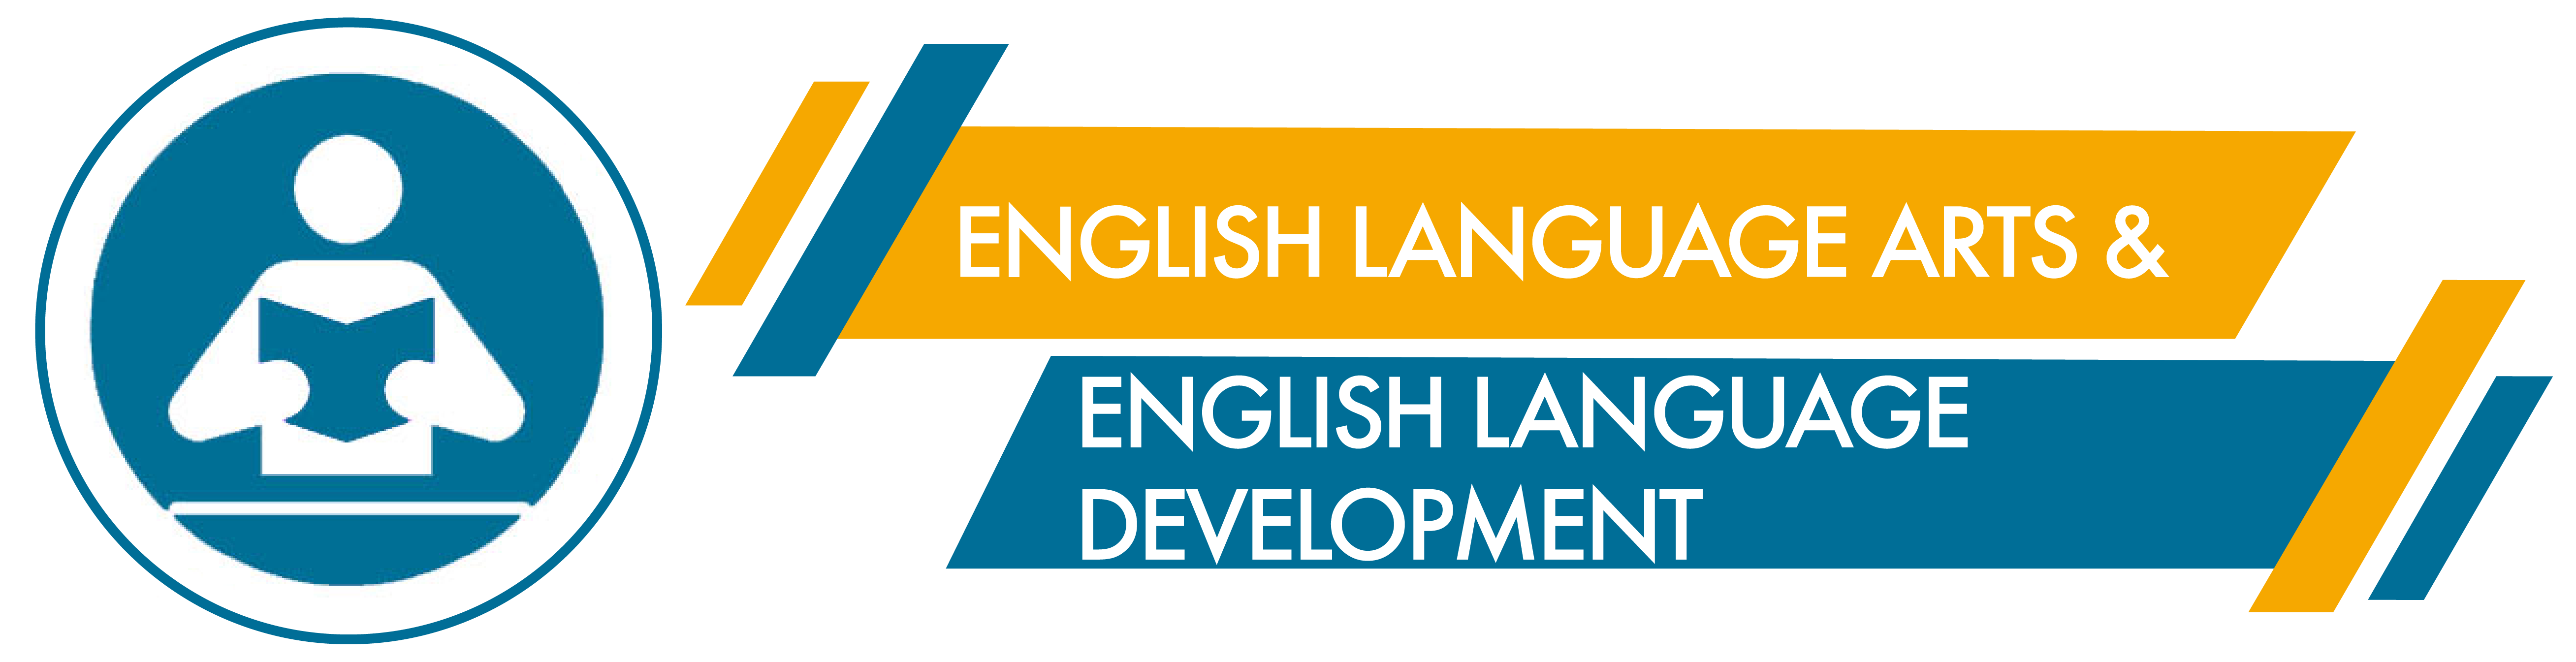 English Language Arts & English Language Development (ELA/ELD) Banner